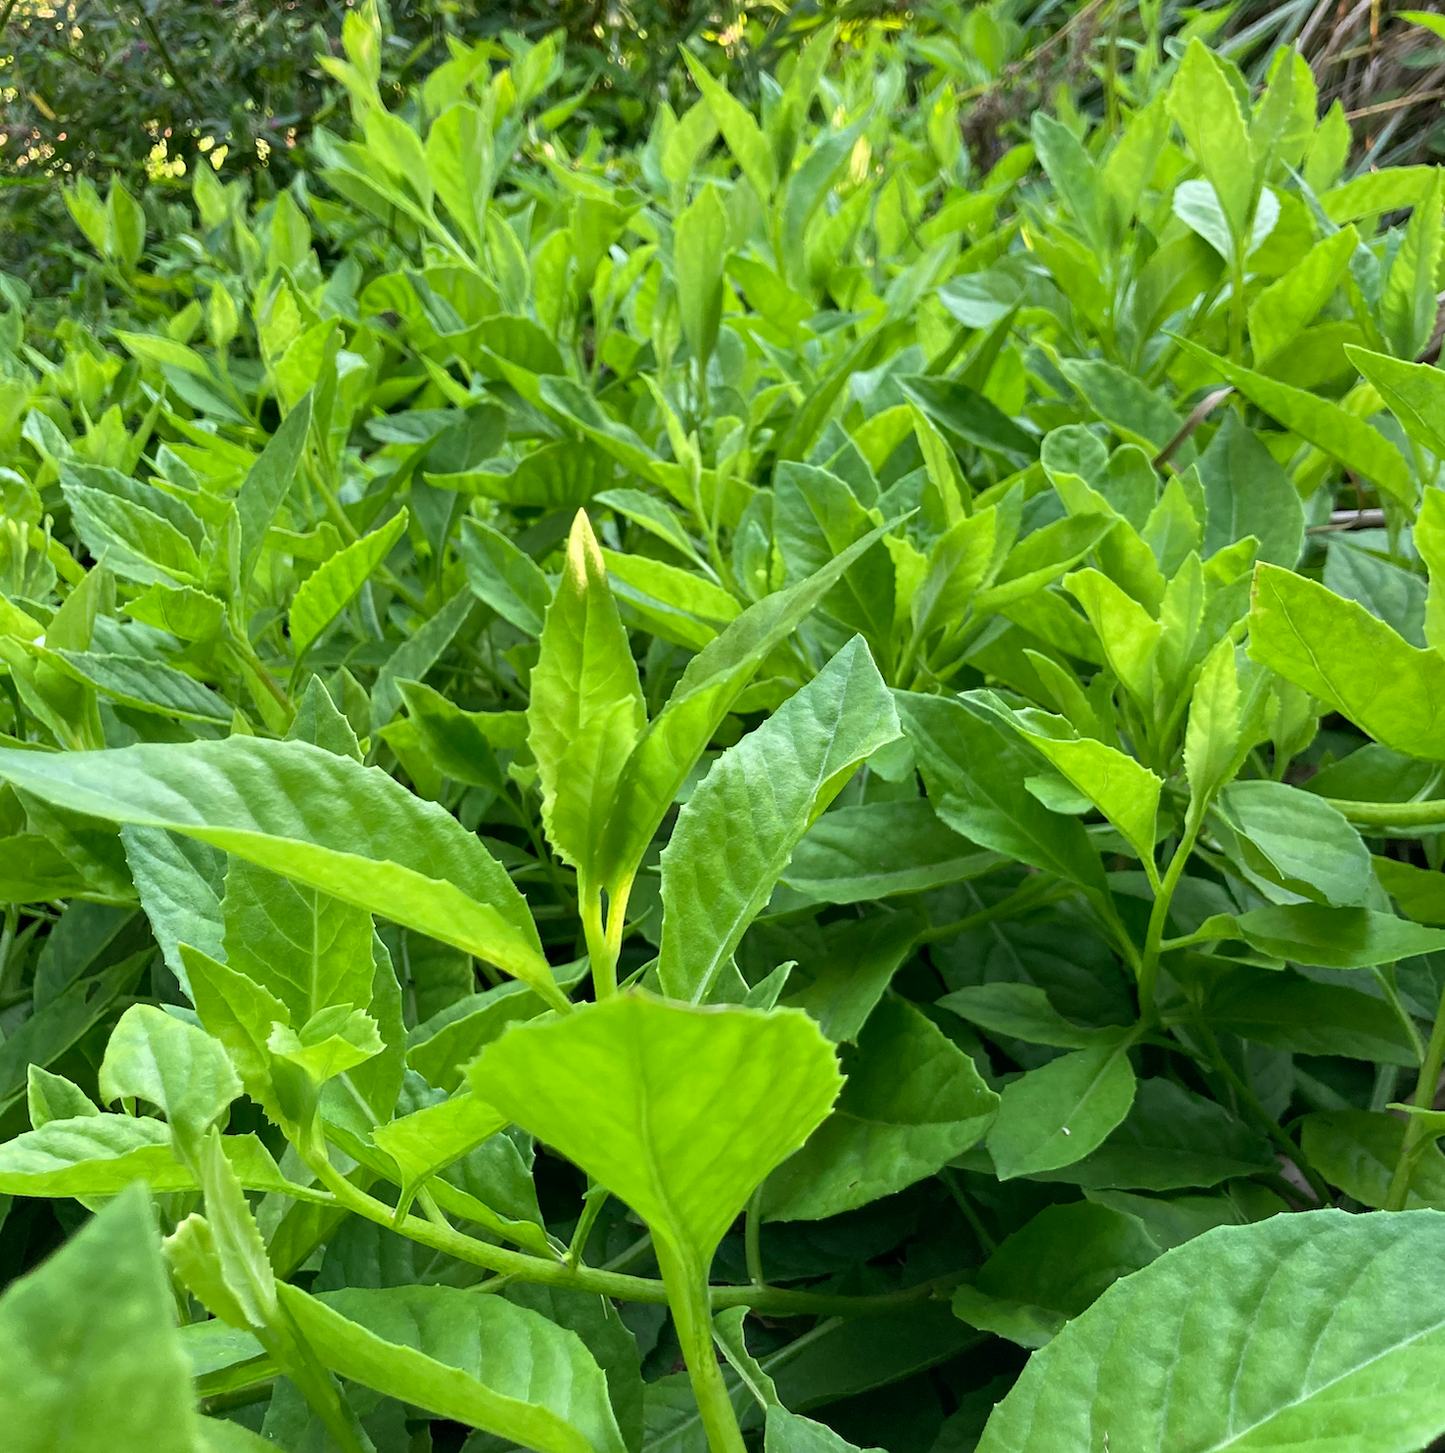 Longevity Spinach